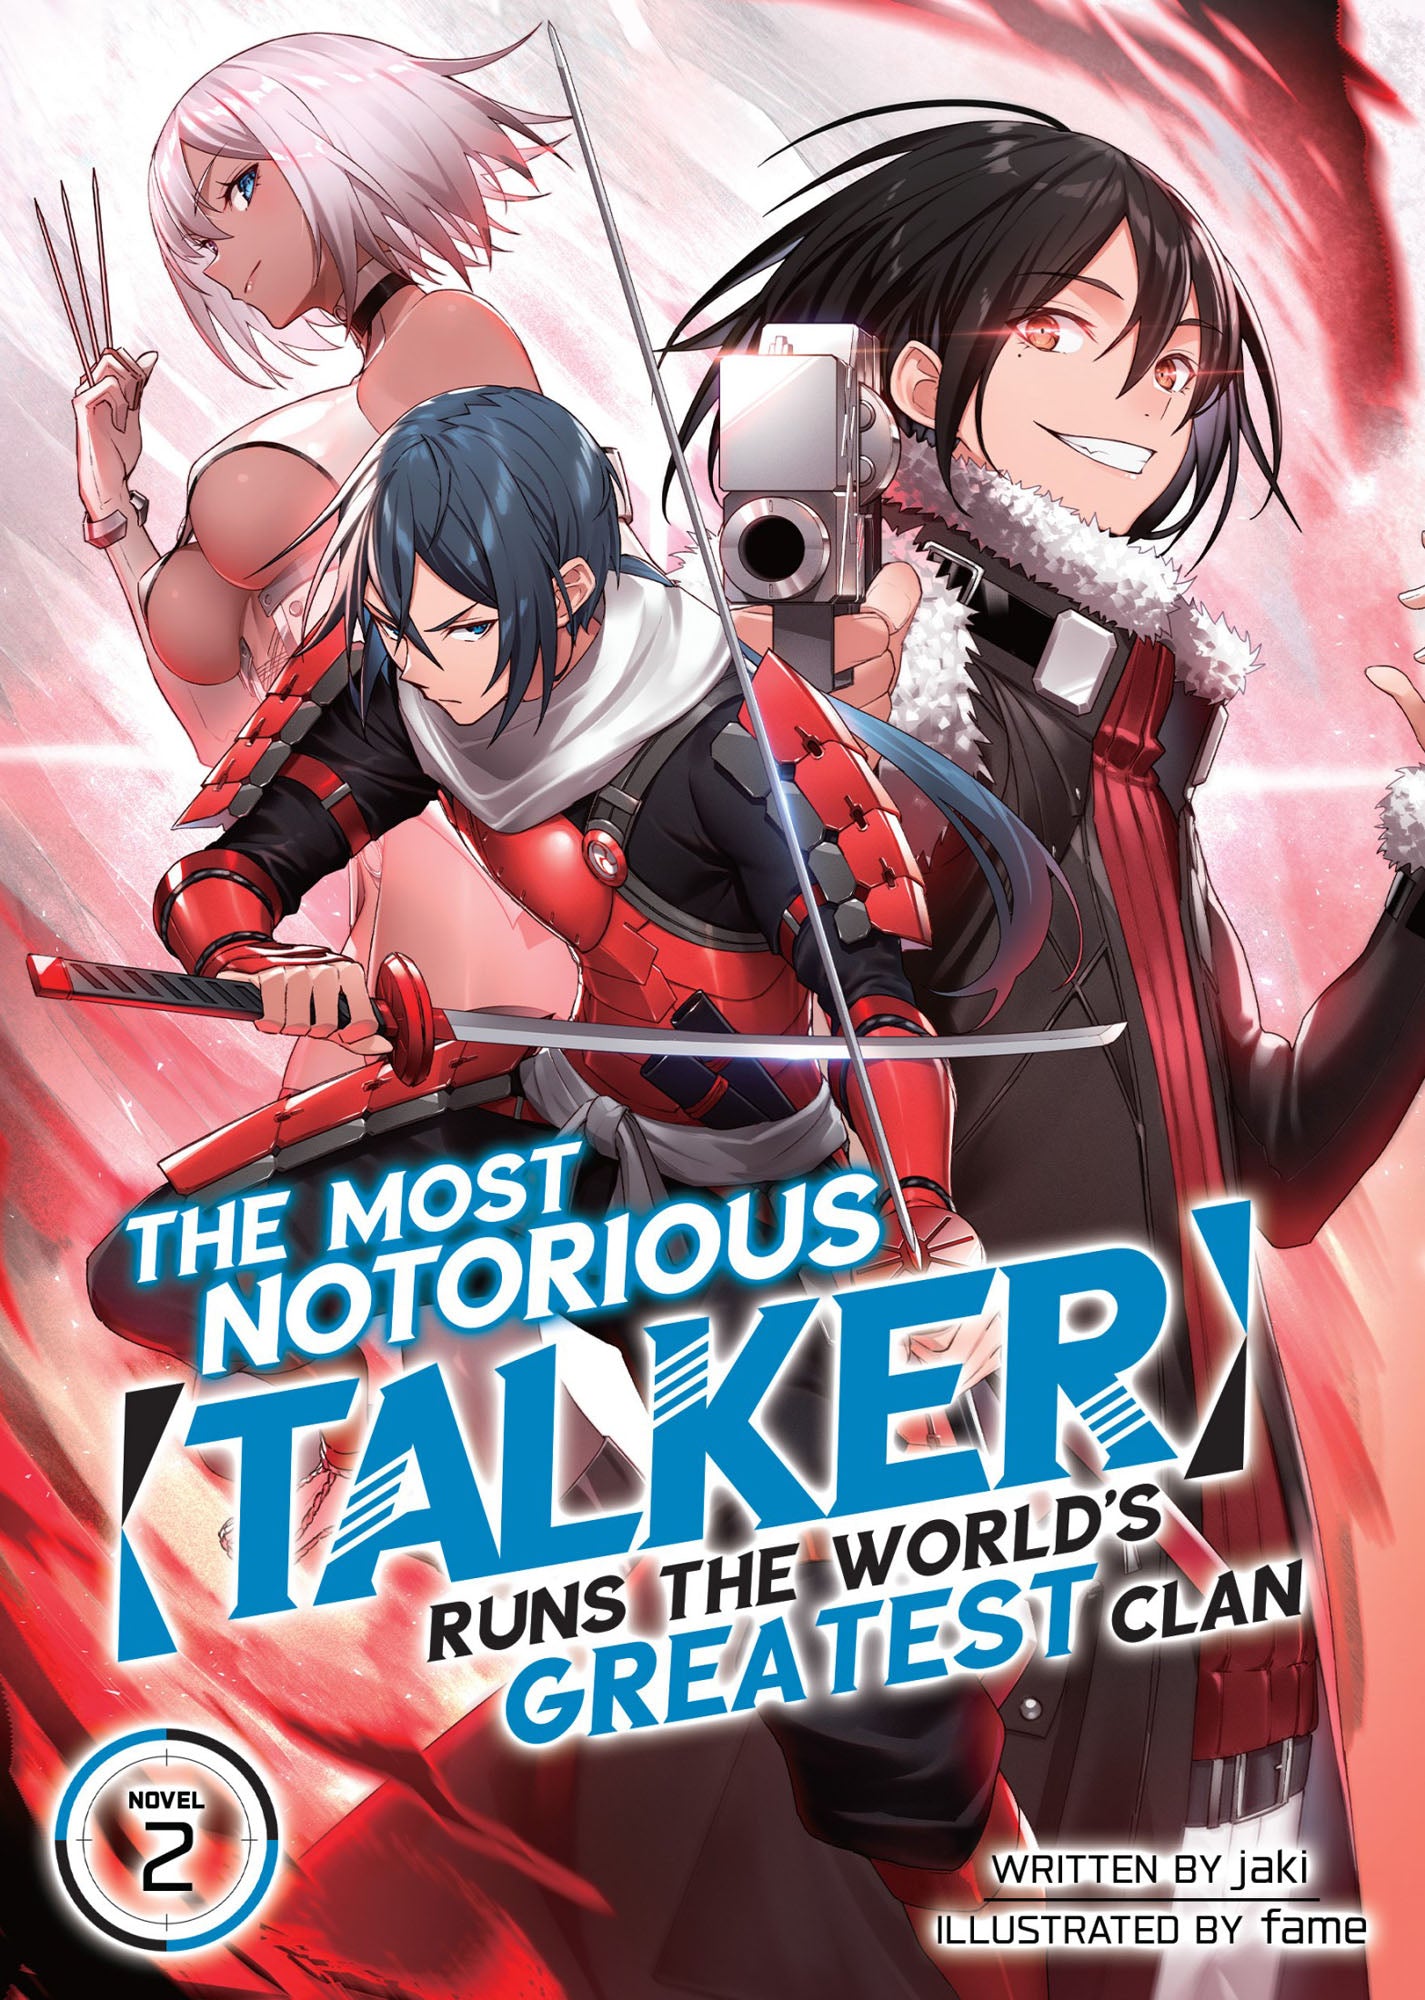 The Most Notorious Talker Runs the World's Greatest Clan (Light Novel) Vol. 02